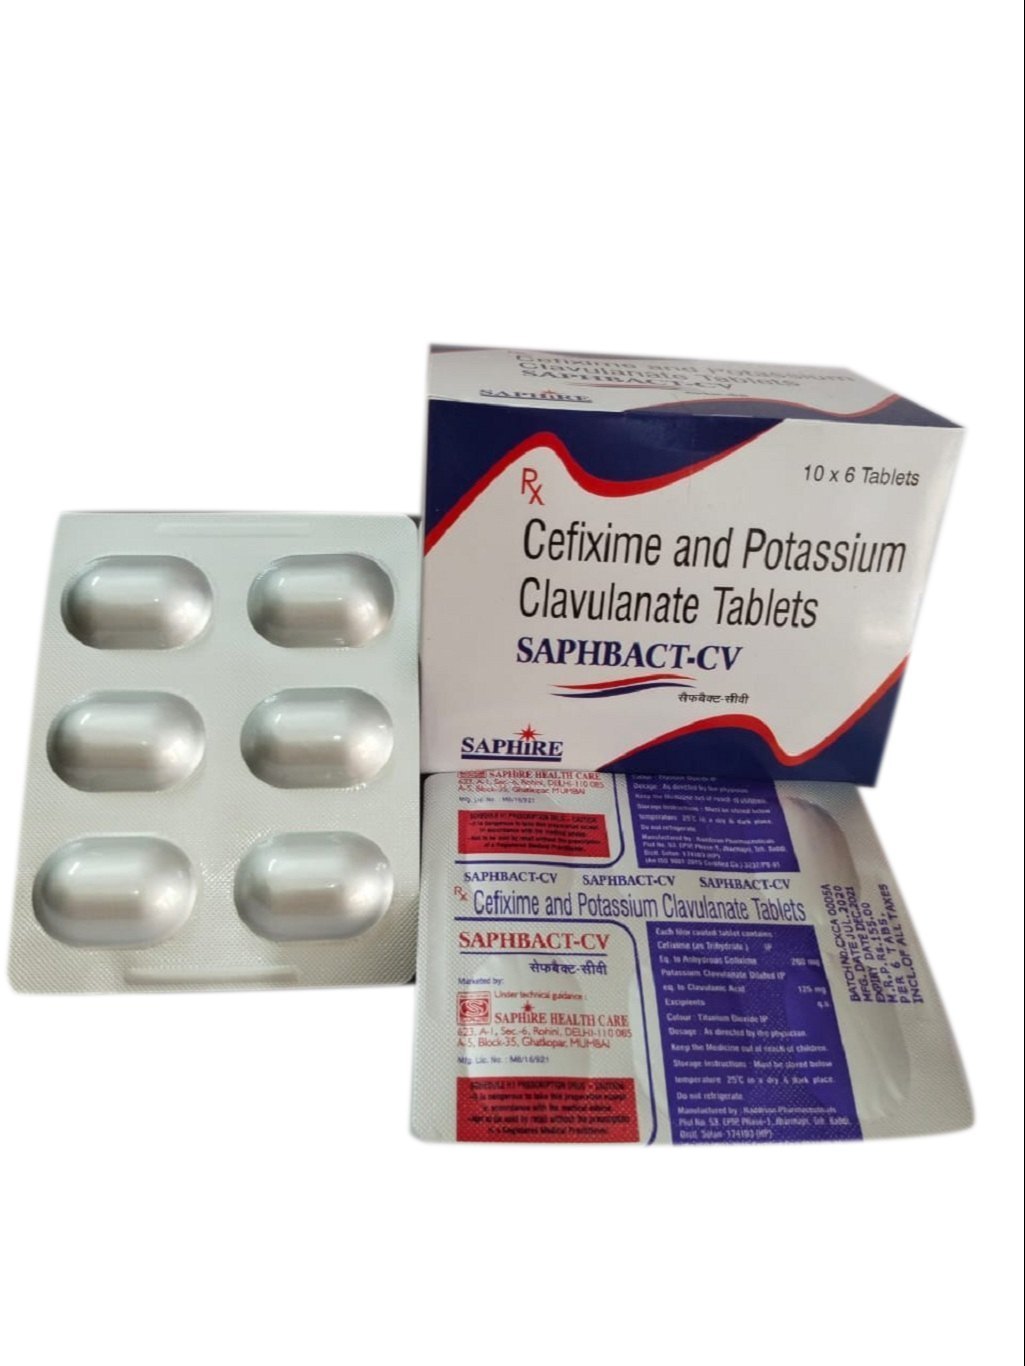 cefixime potassium clavulanate tablets